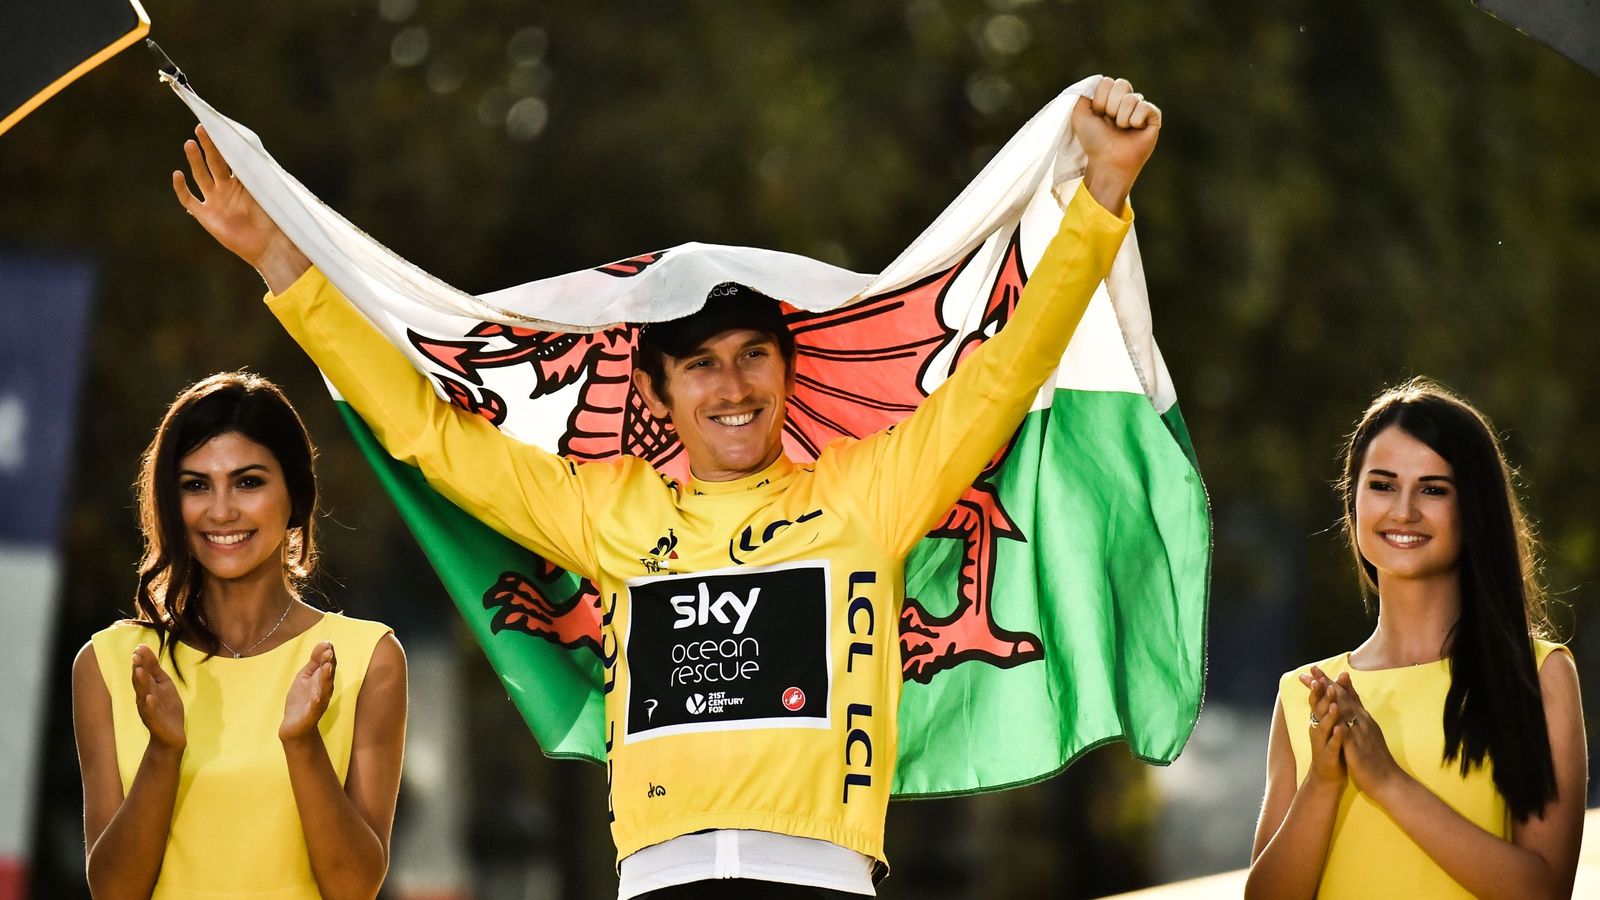 Team Sky's Geraint Thomas first Welshman to win Tour de France